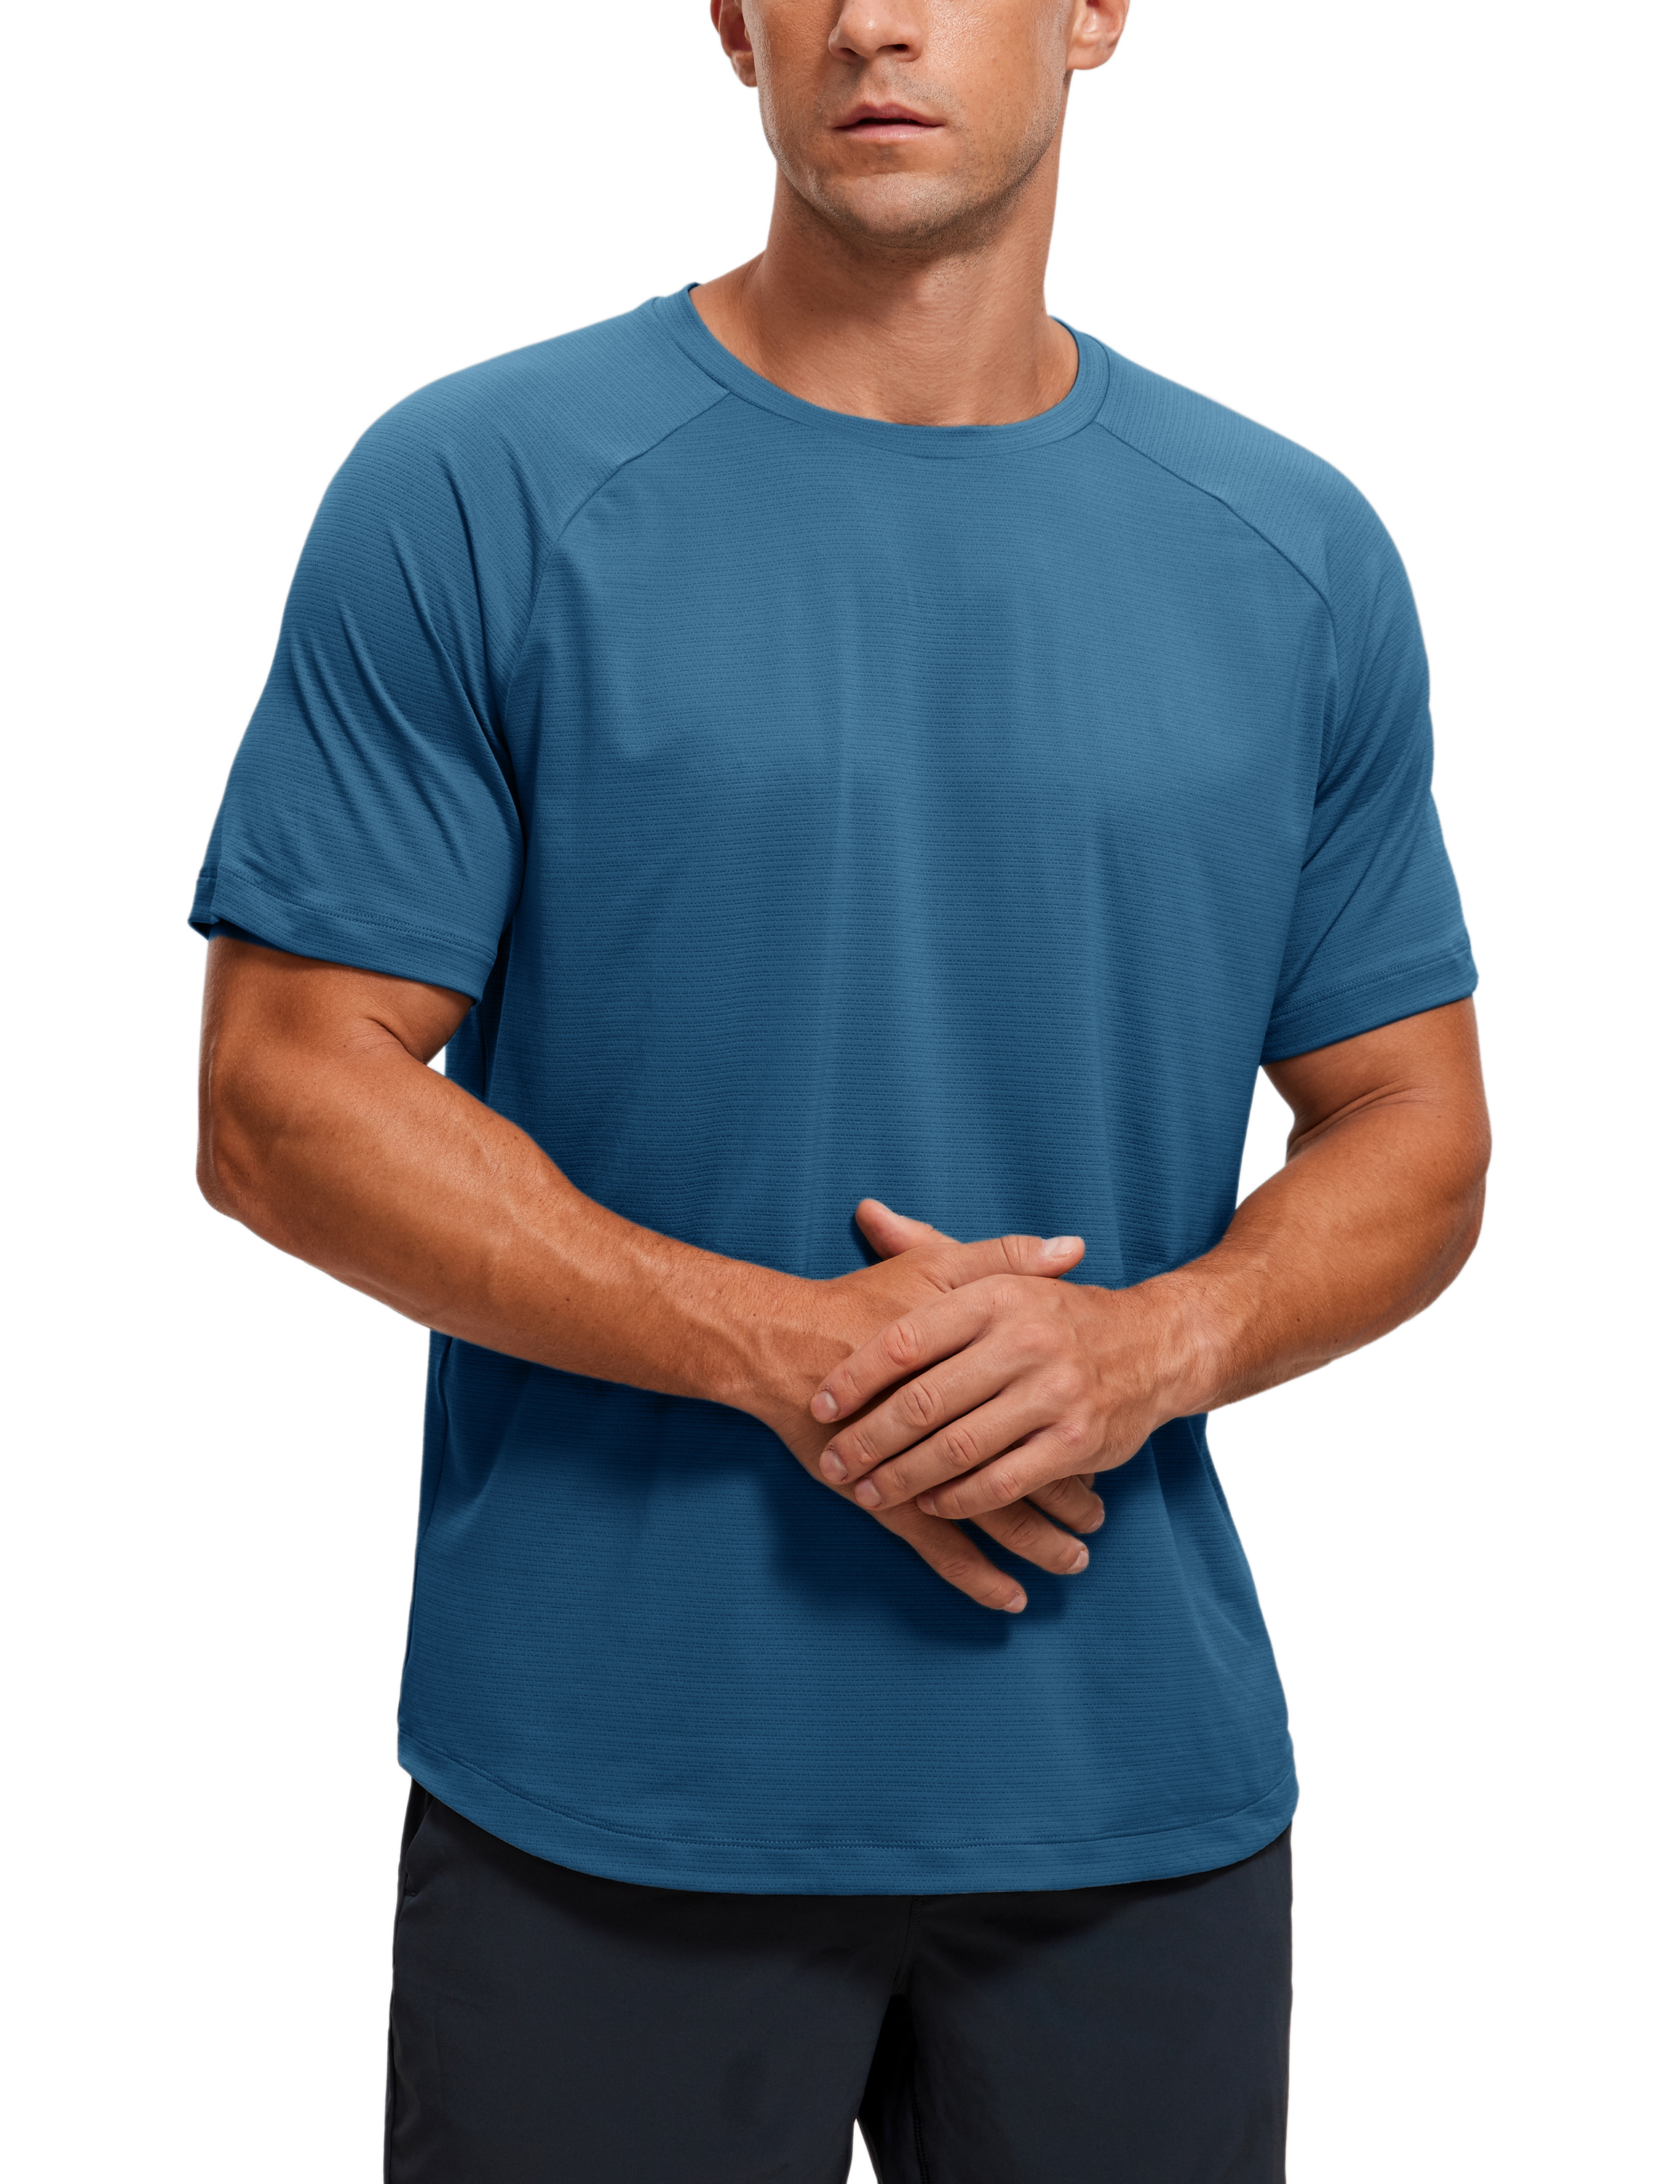 CRZ YOGA Lightweight Men's Quick Dry Crew Neck T-Shirt Short Sleeve Gym Top  